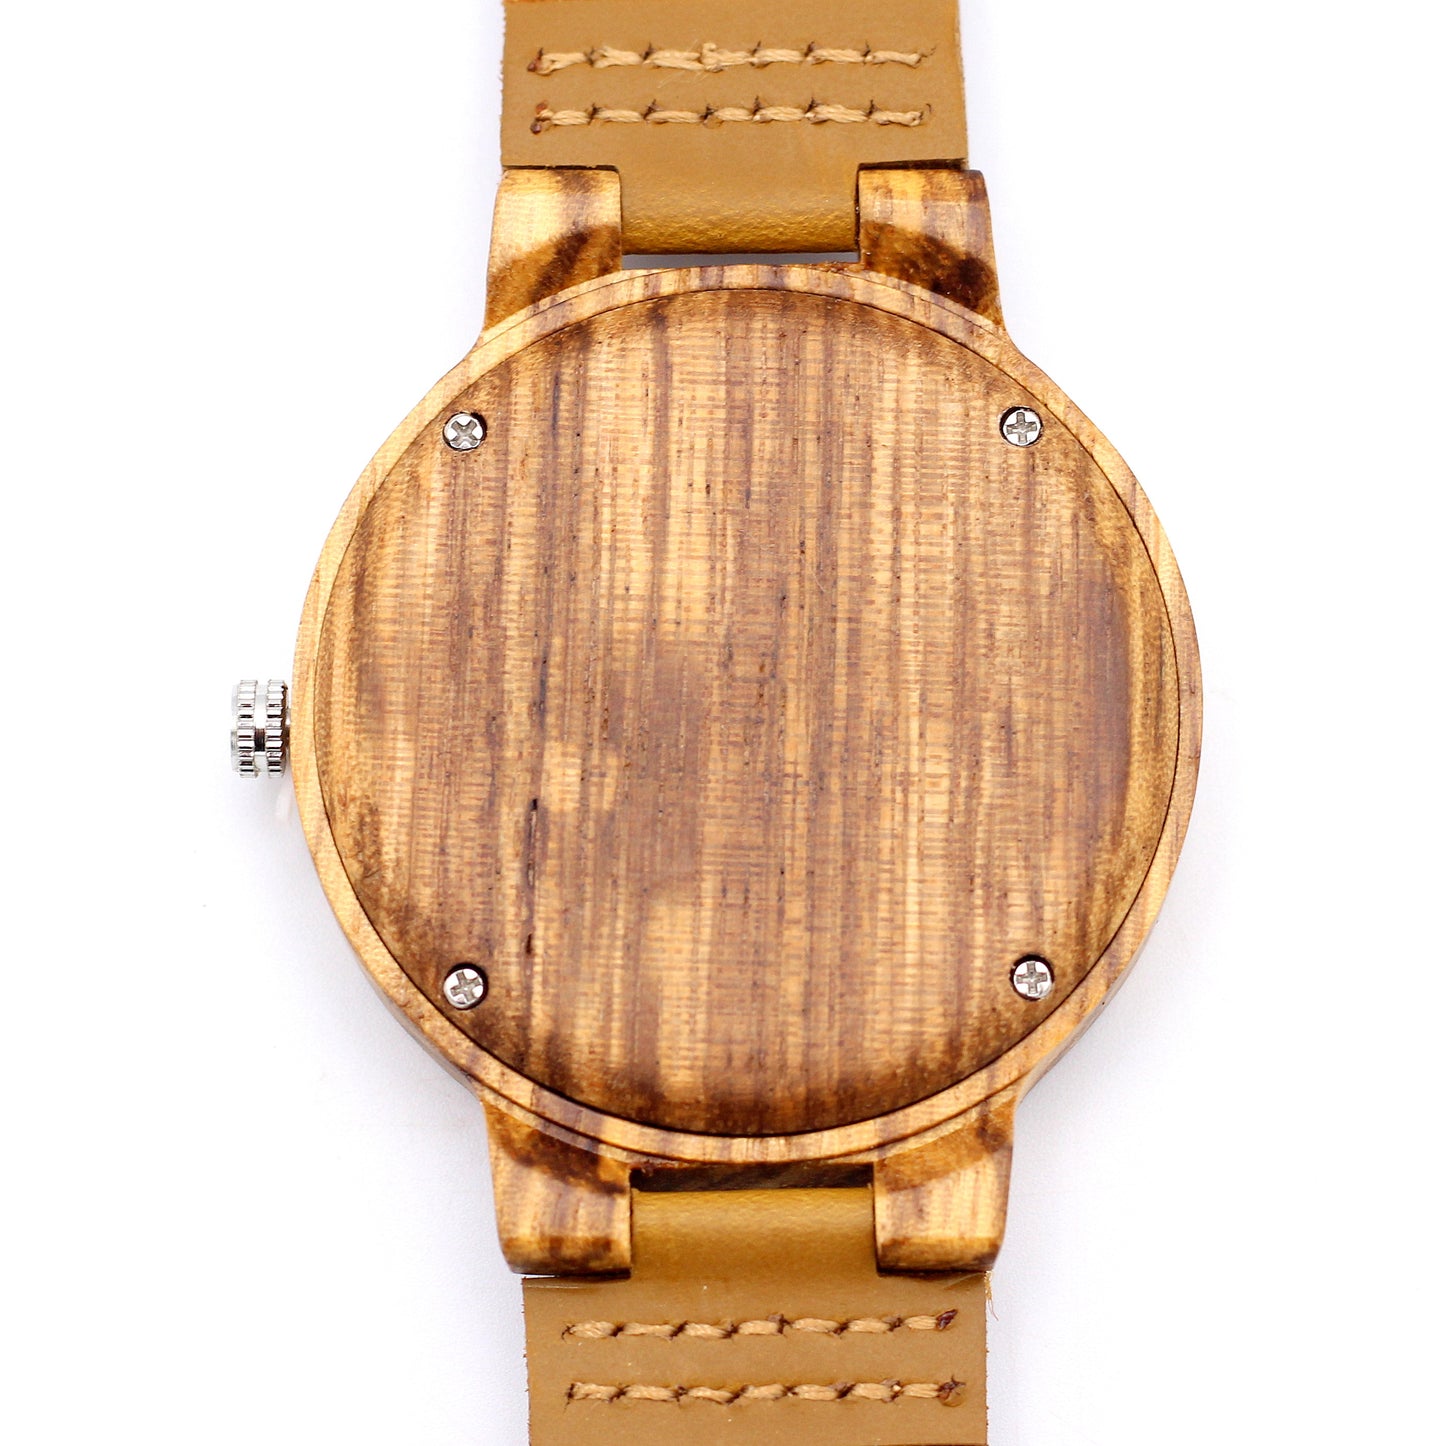 REV BROWN Men's Wooden Watch Leather Strap